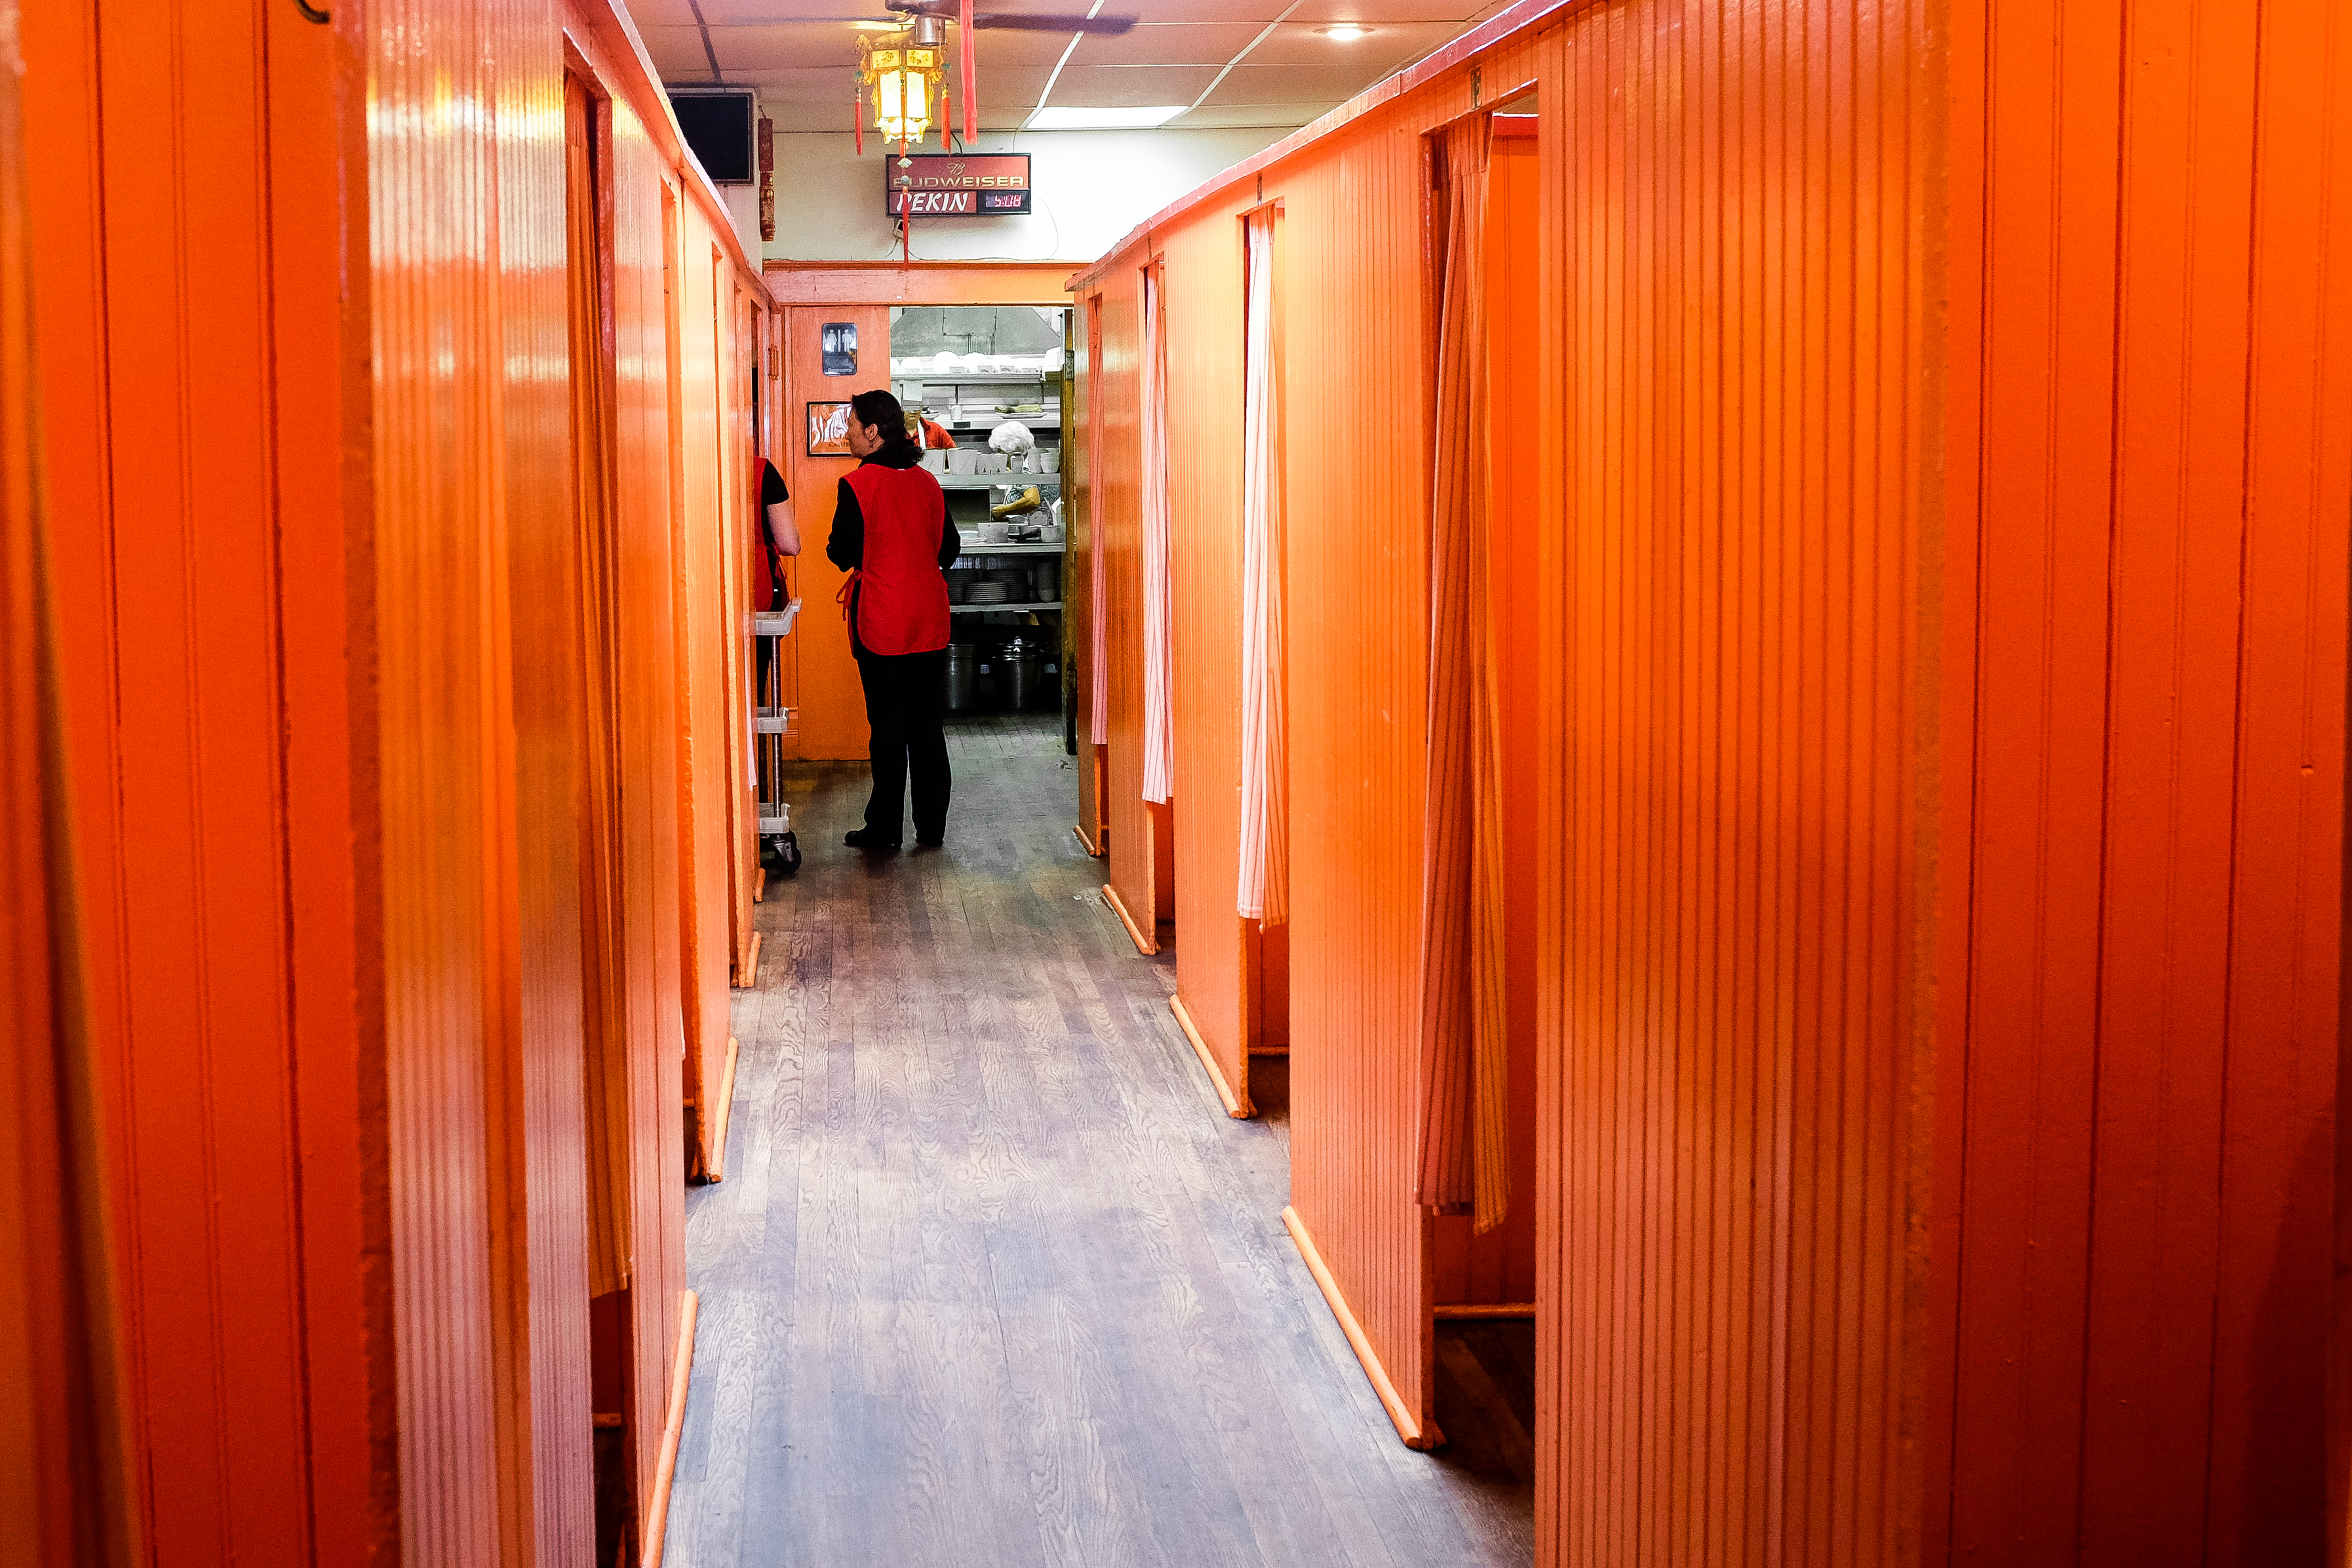 A narrow hallway inside Pekin Noodle Parlor.